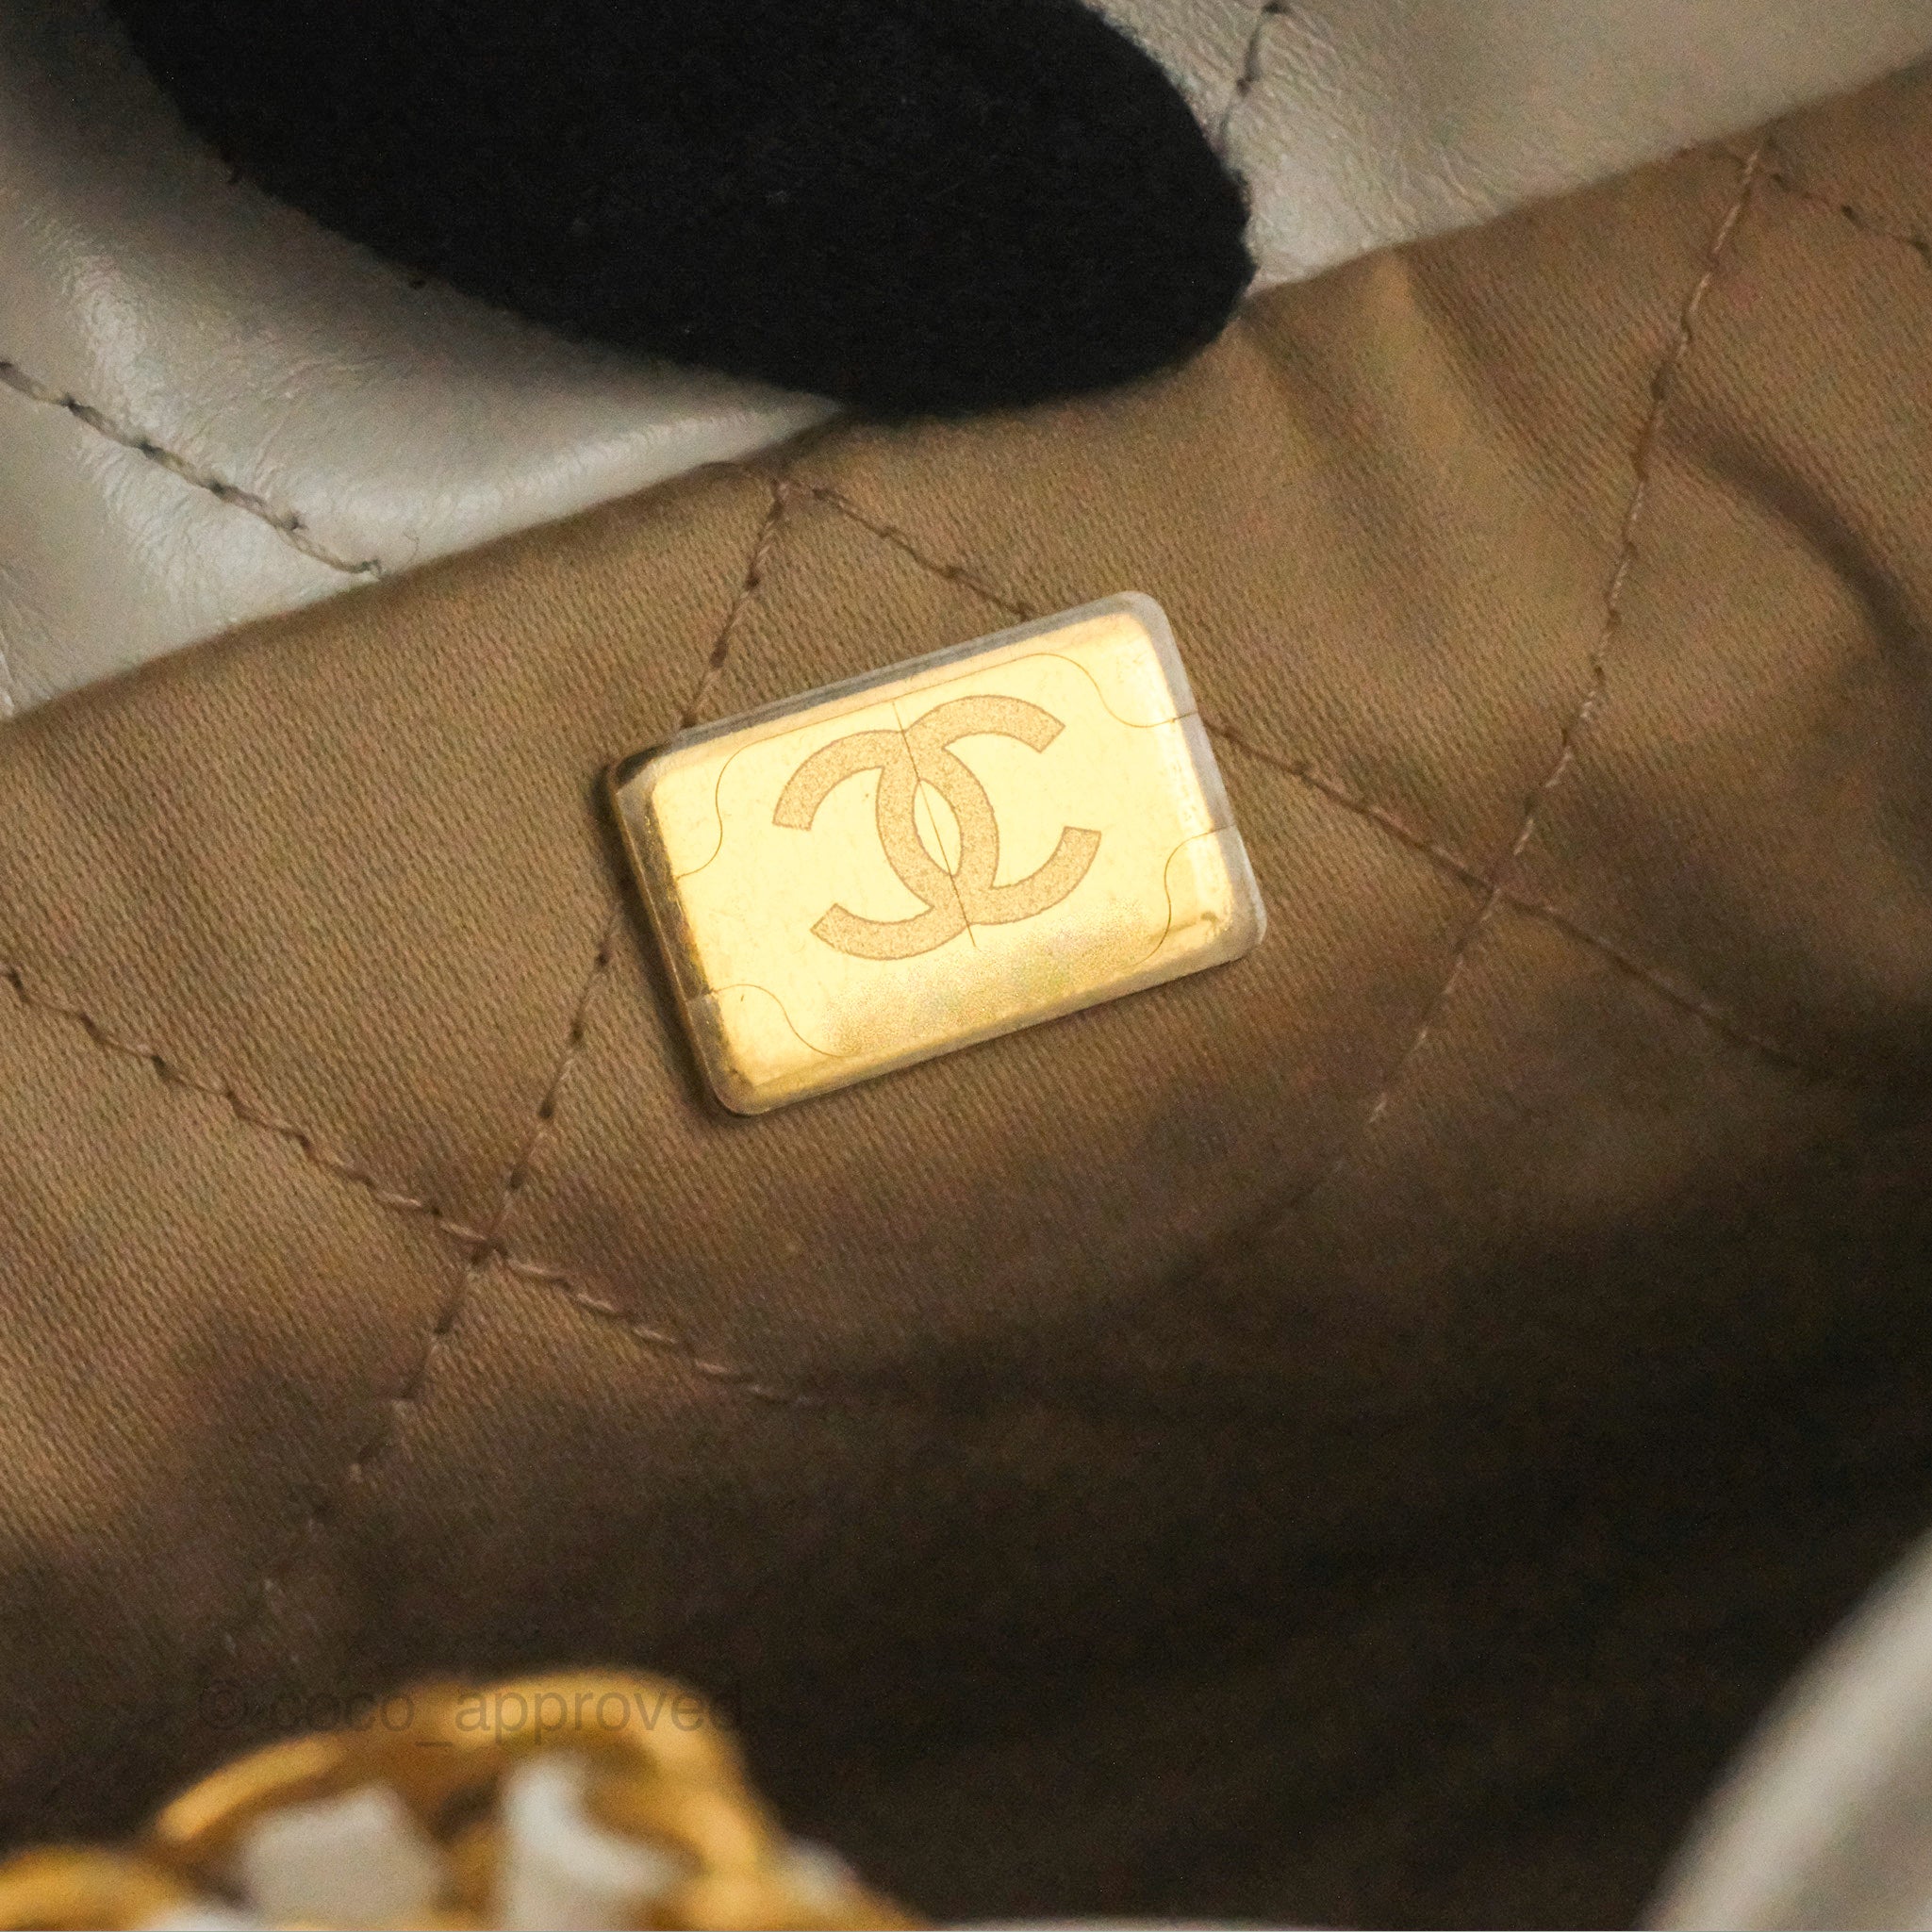 Chanel 22 Mini Bag White Shiny Crumpled Calfskin – Coco Approved Studio